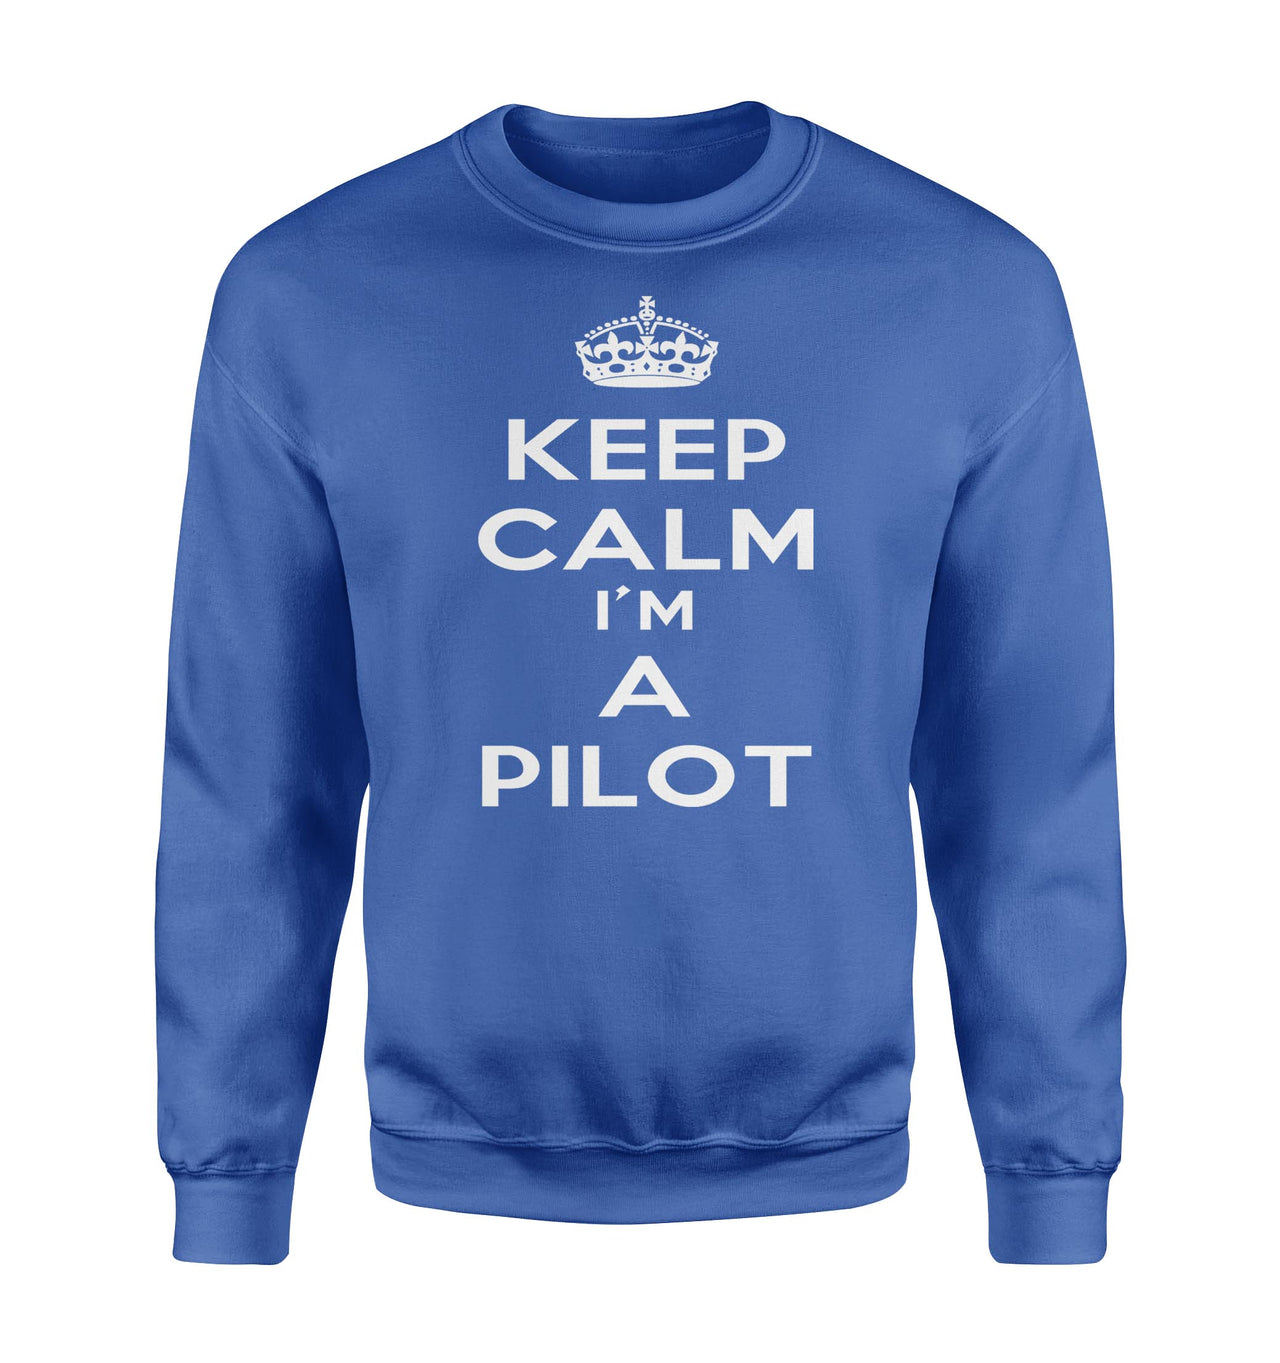 Keep Calm I'm a Pilot Designed Sweatshirts